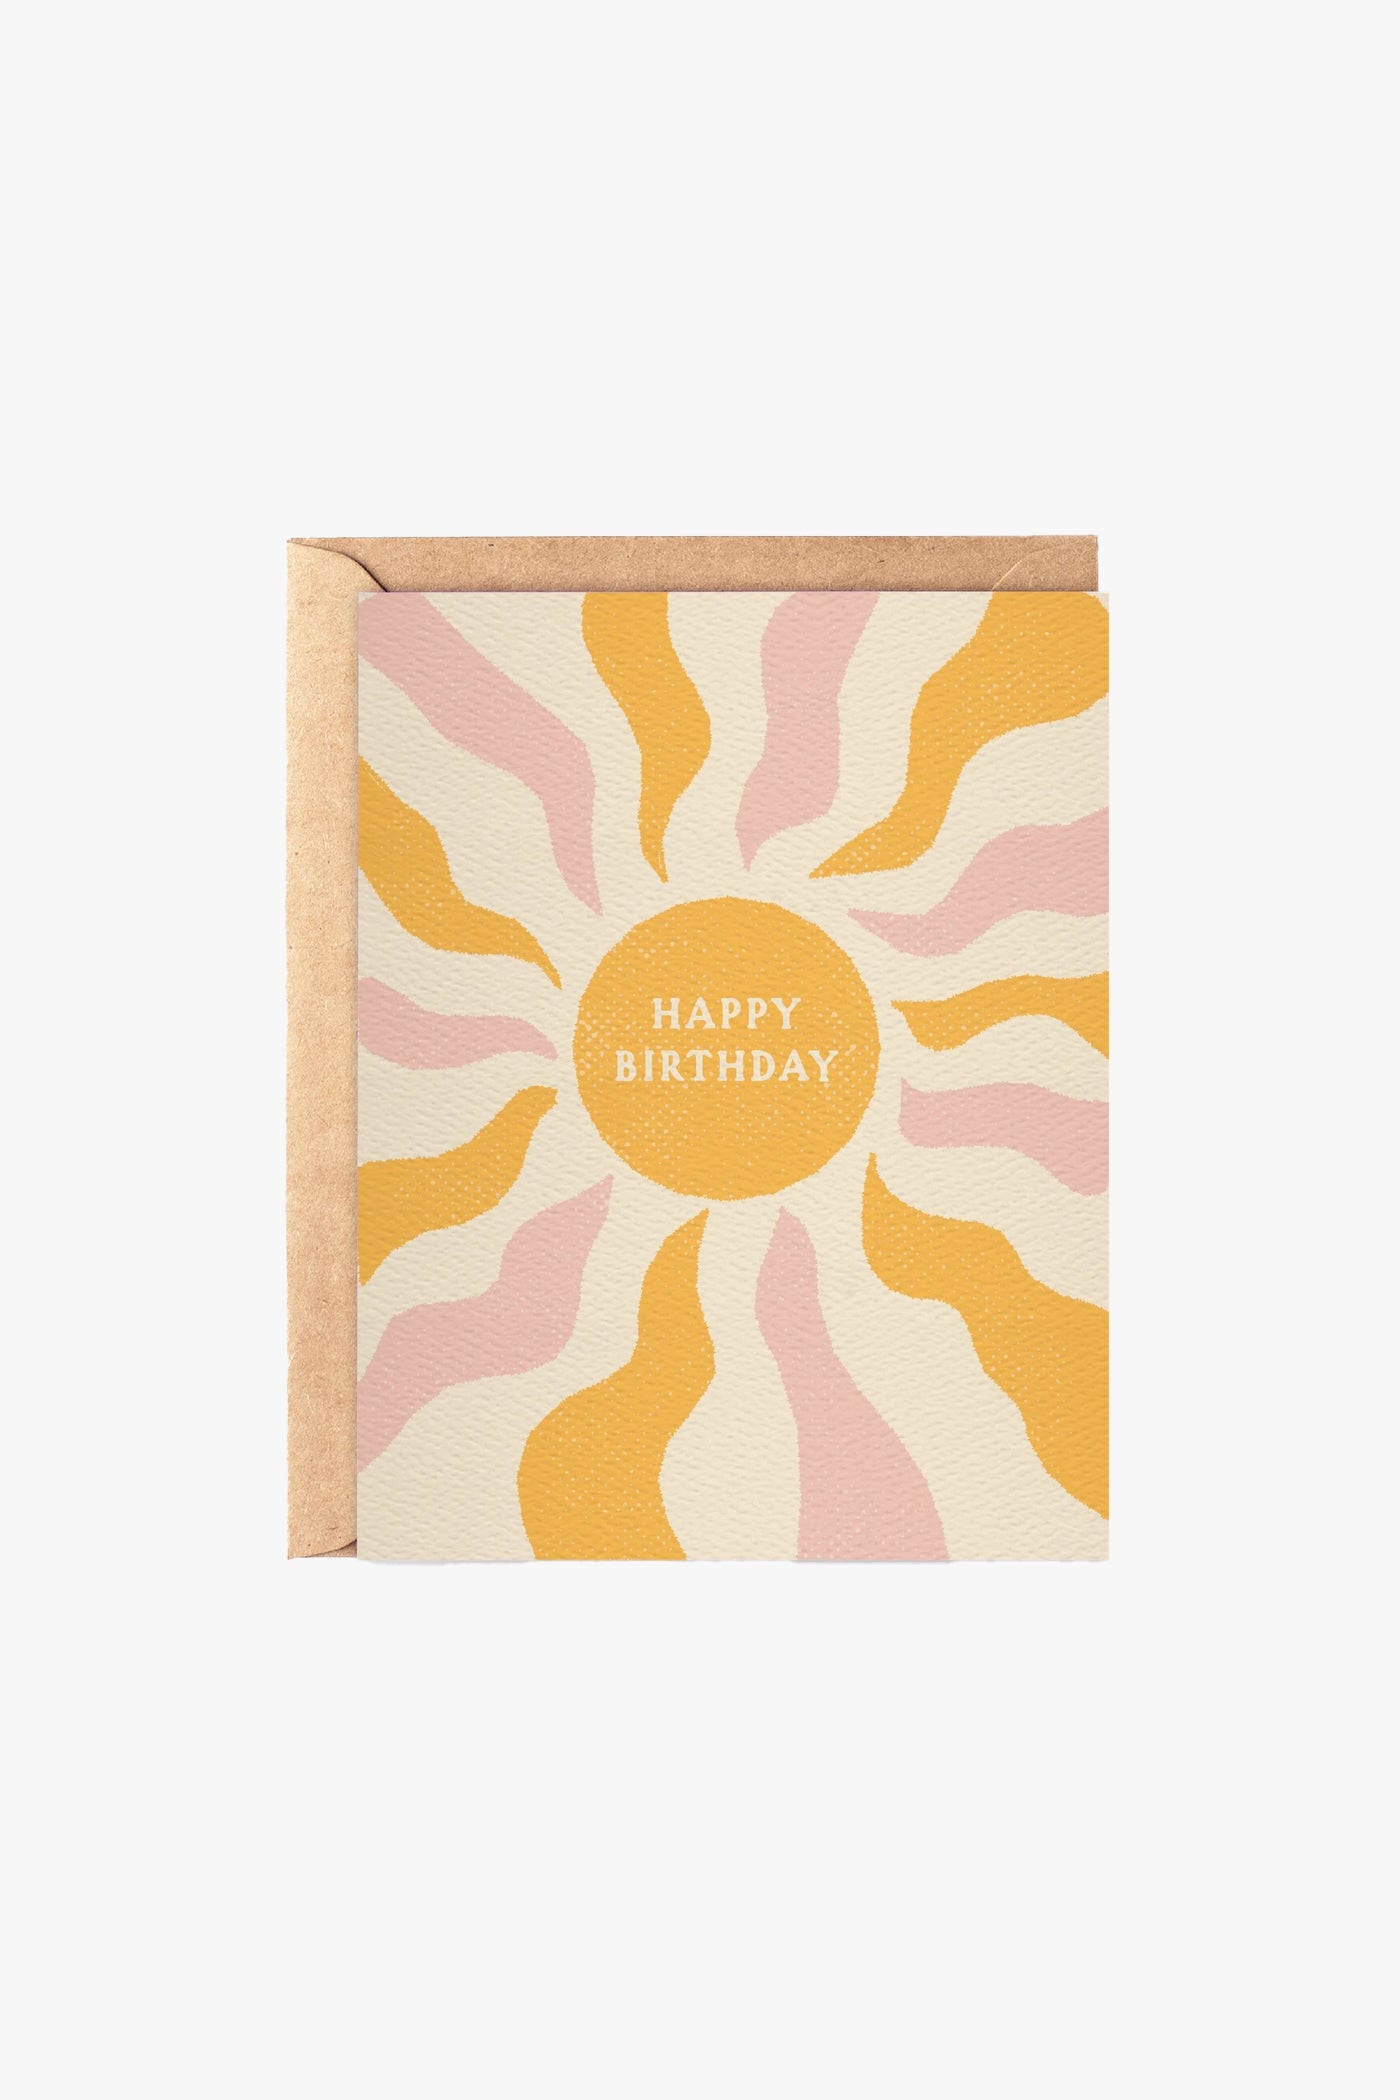 Daydream Prints Boho Sun Birthday Card